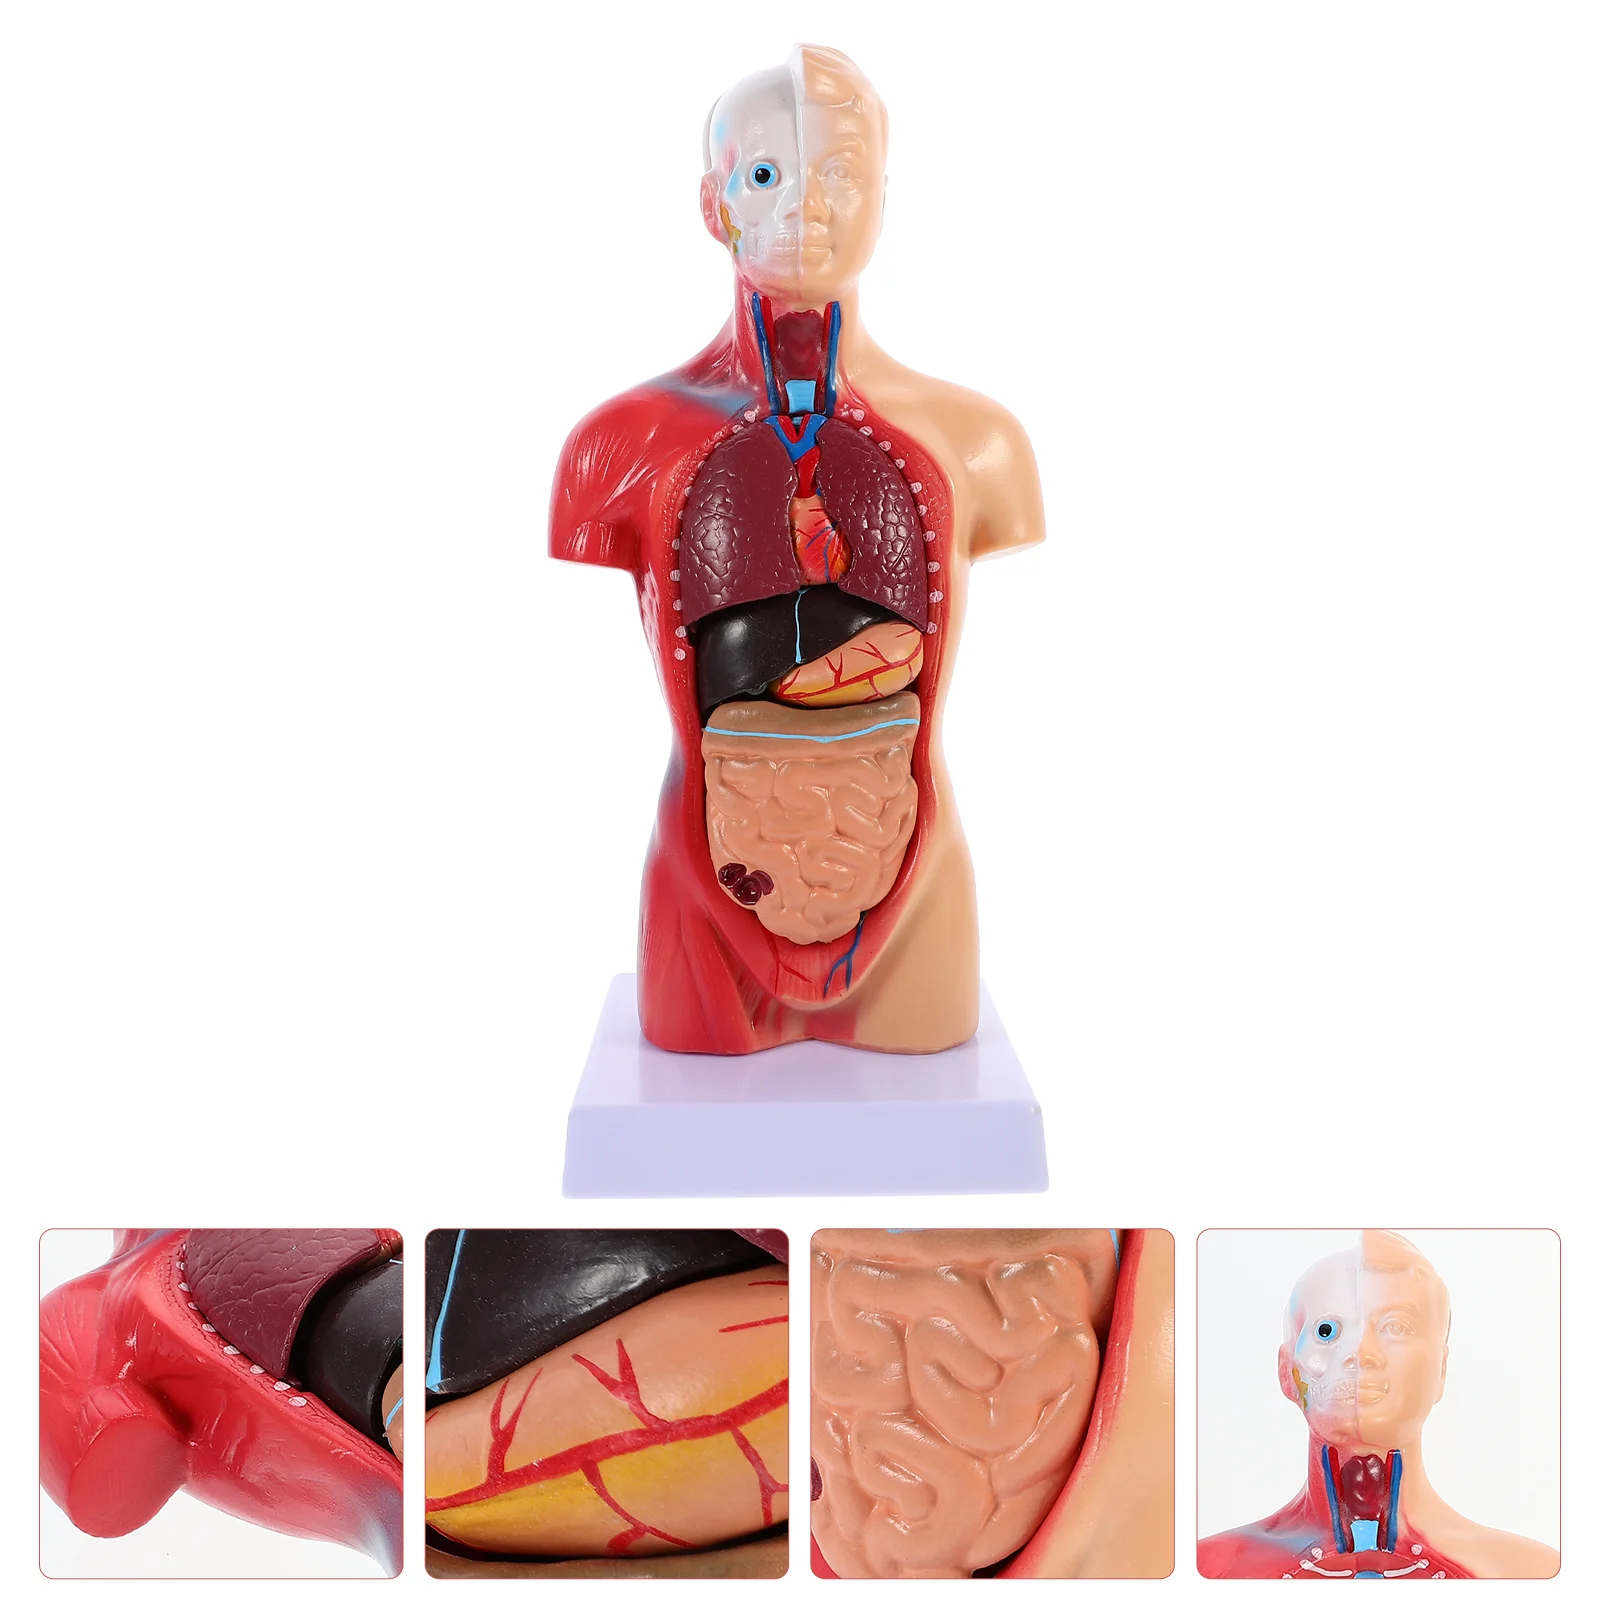 

Mannequin Anatomical Torso Model Human Body Teaching Kids Toy Anatomy Pvc Child Children Toys Greys